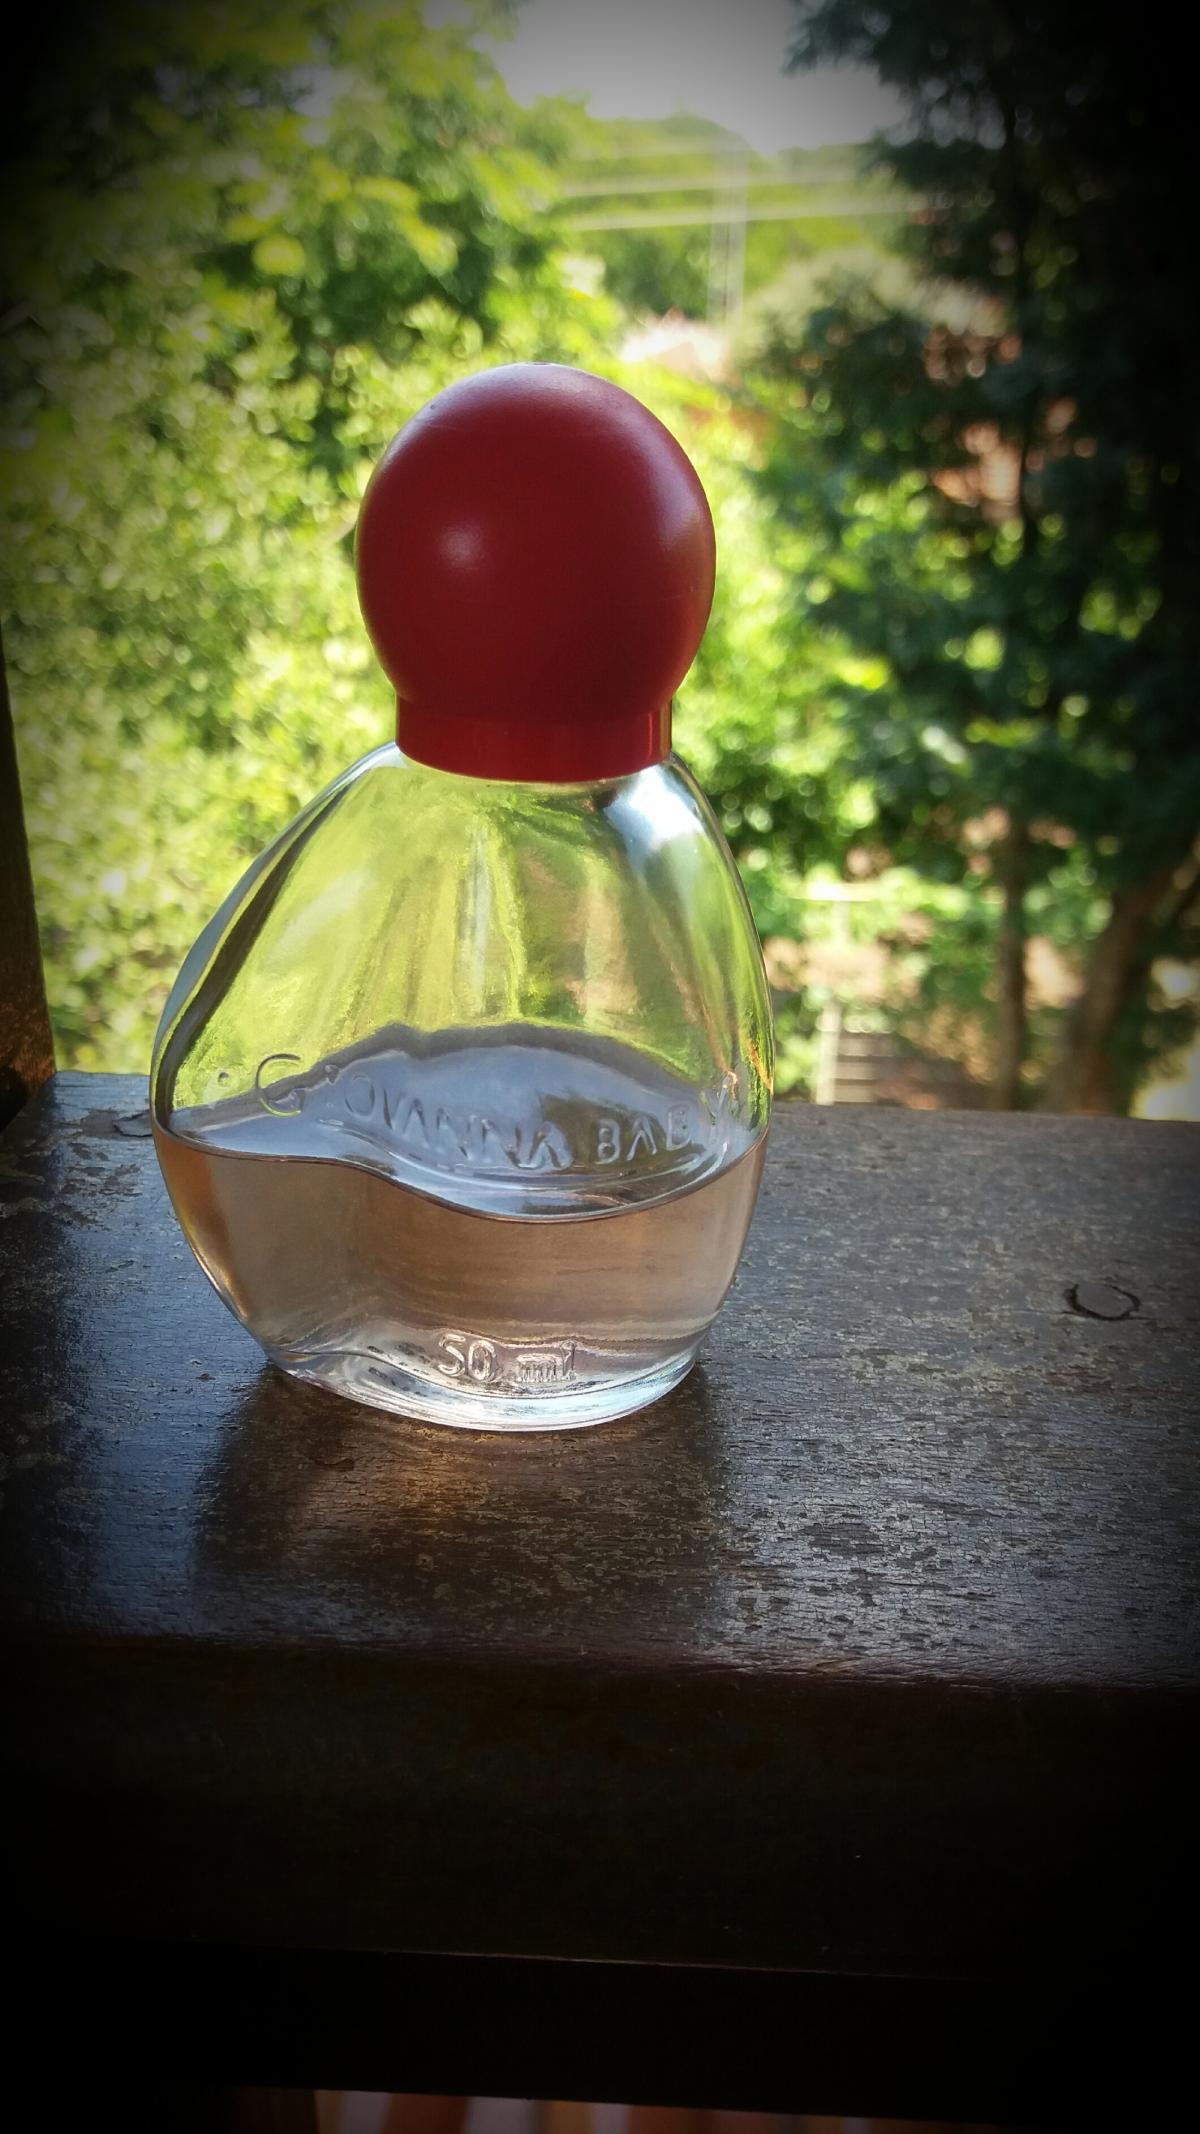 Cherry Giovanna Baby perfume - a fragrance for women 2014